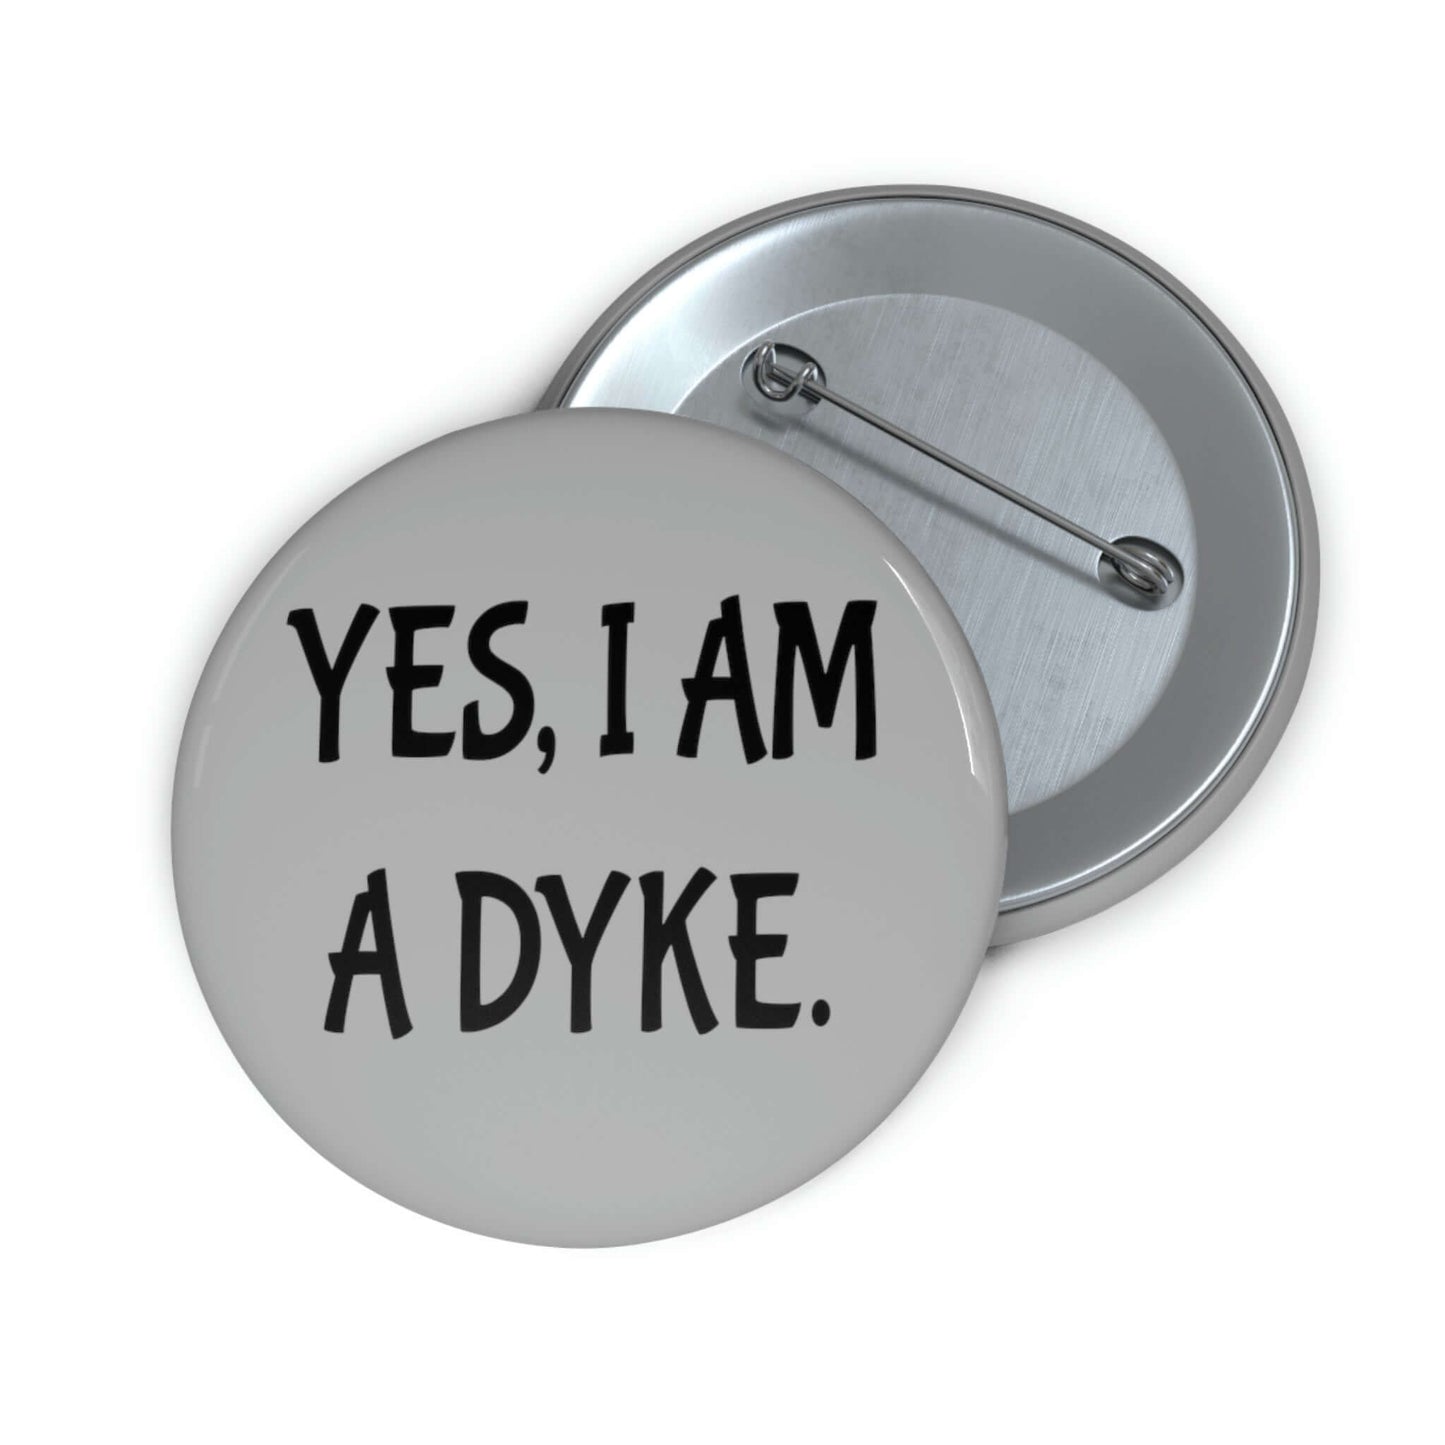 Yes, I am a dyke pinback button